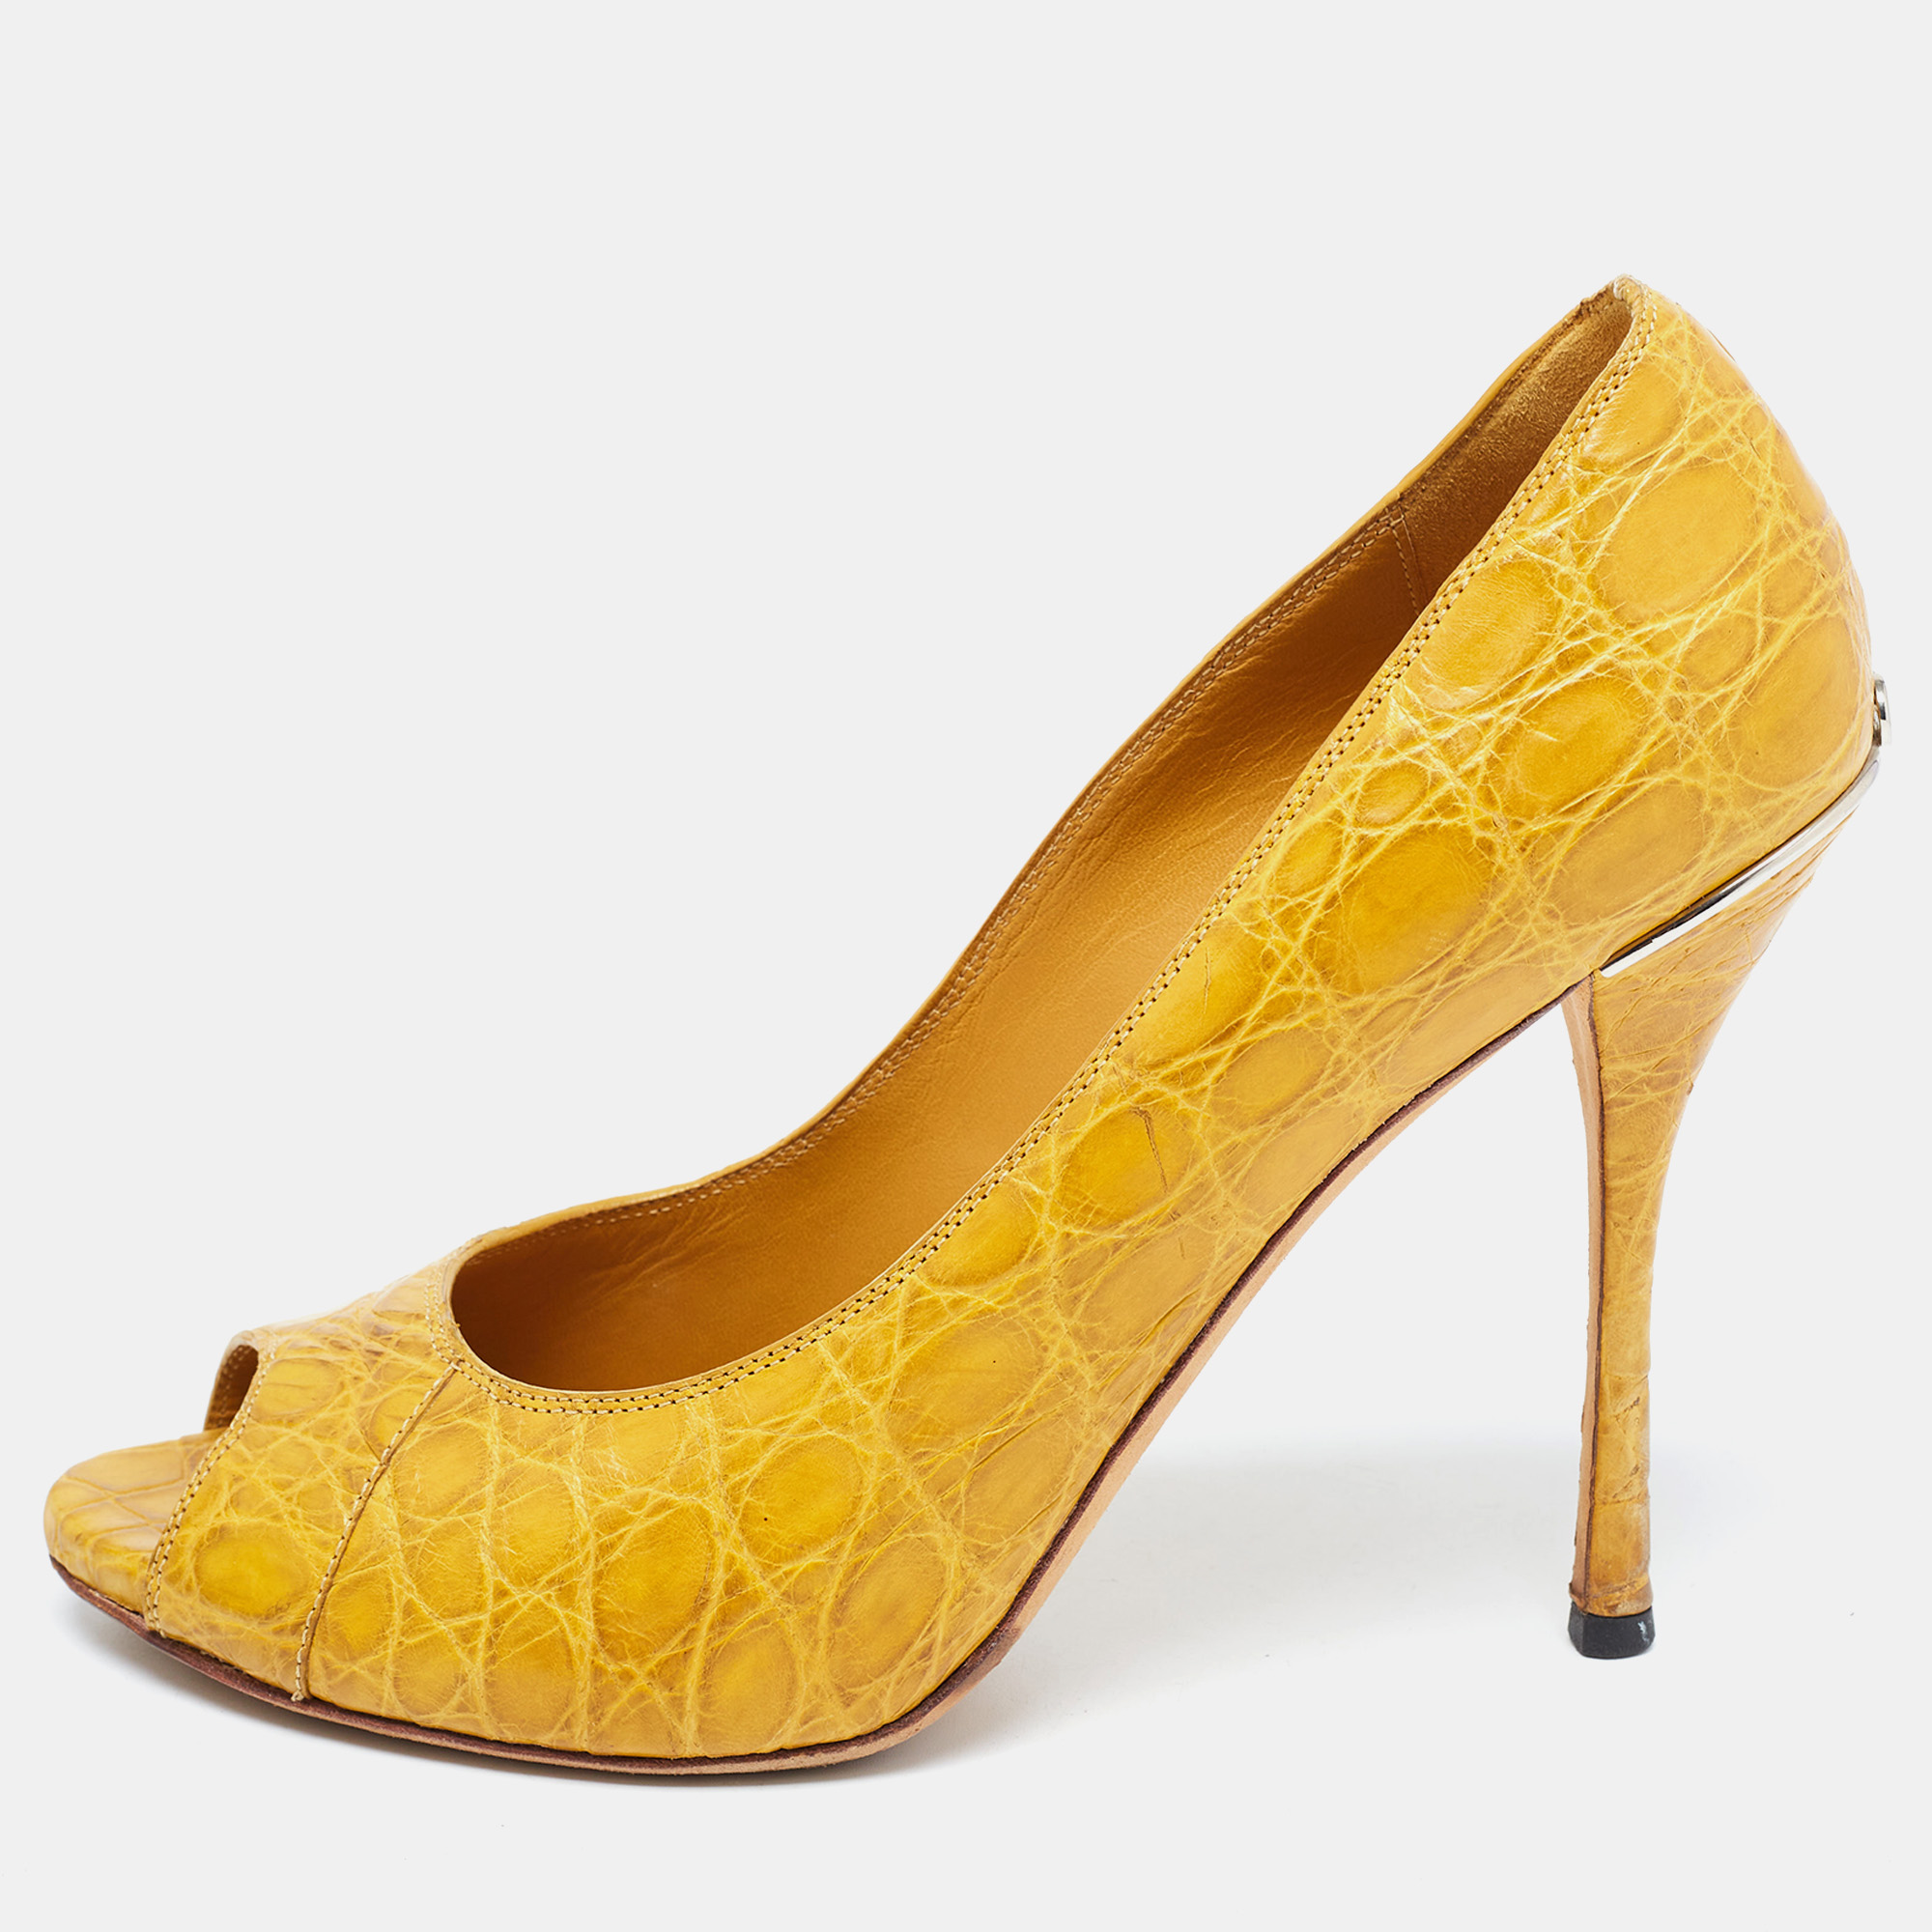 Gucci yellow crocodile  peep toe pumps size 39.5